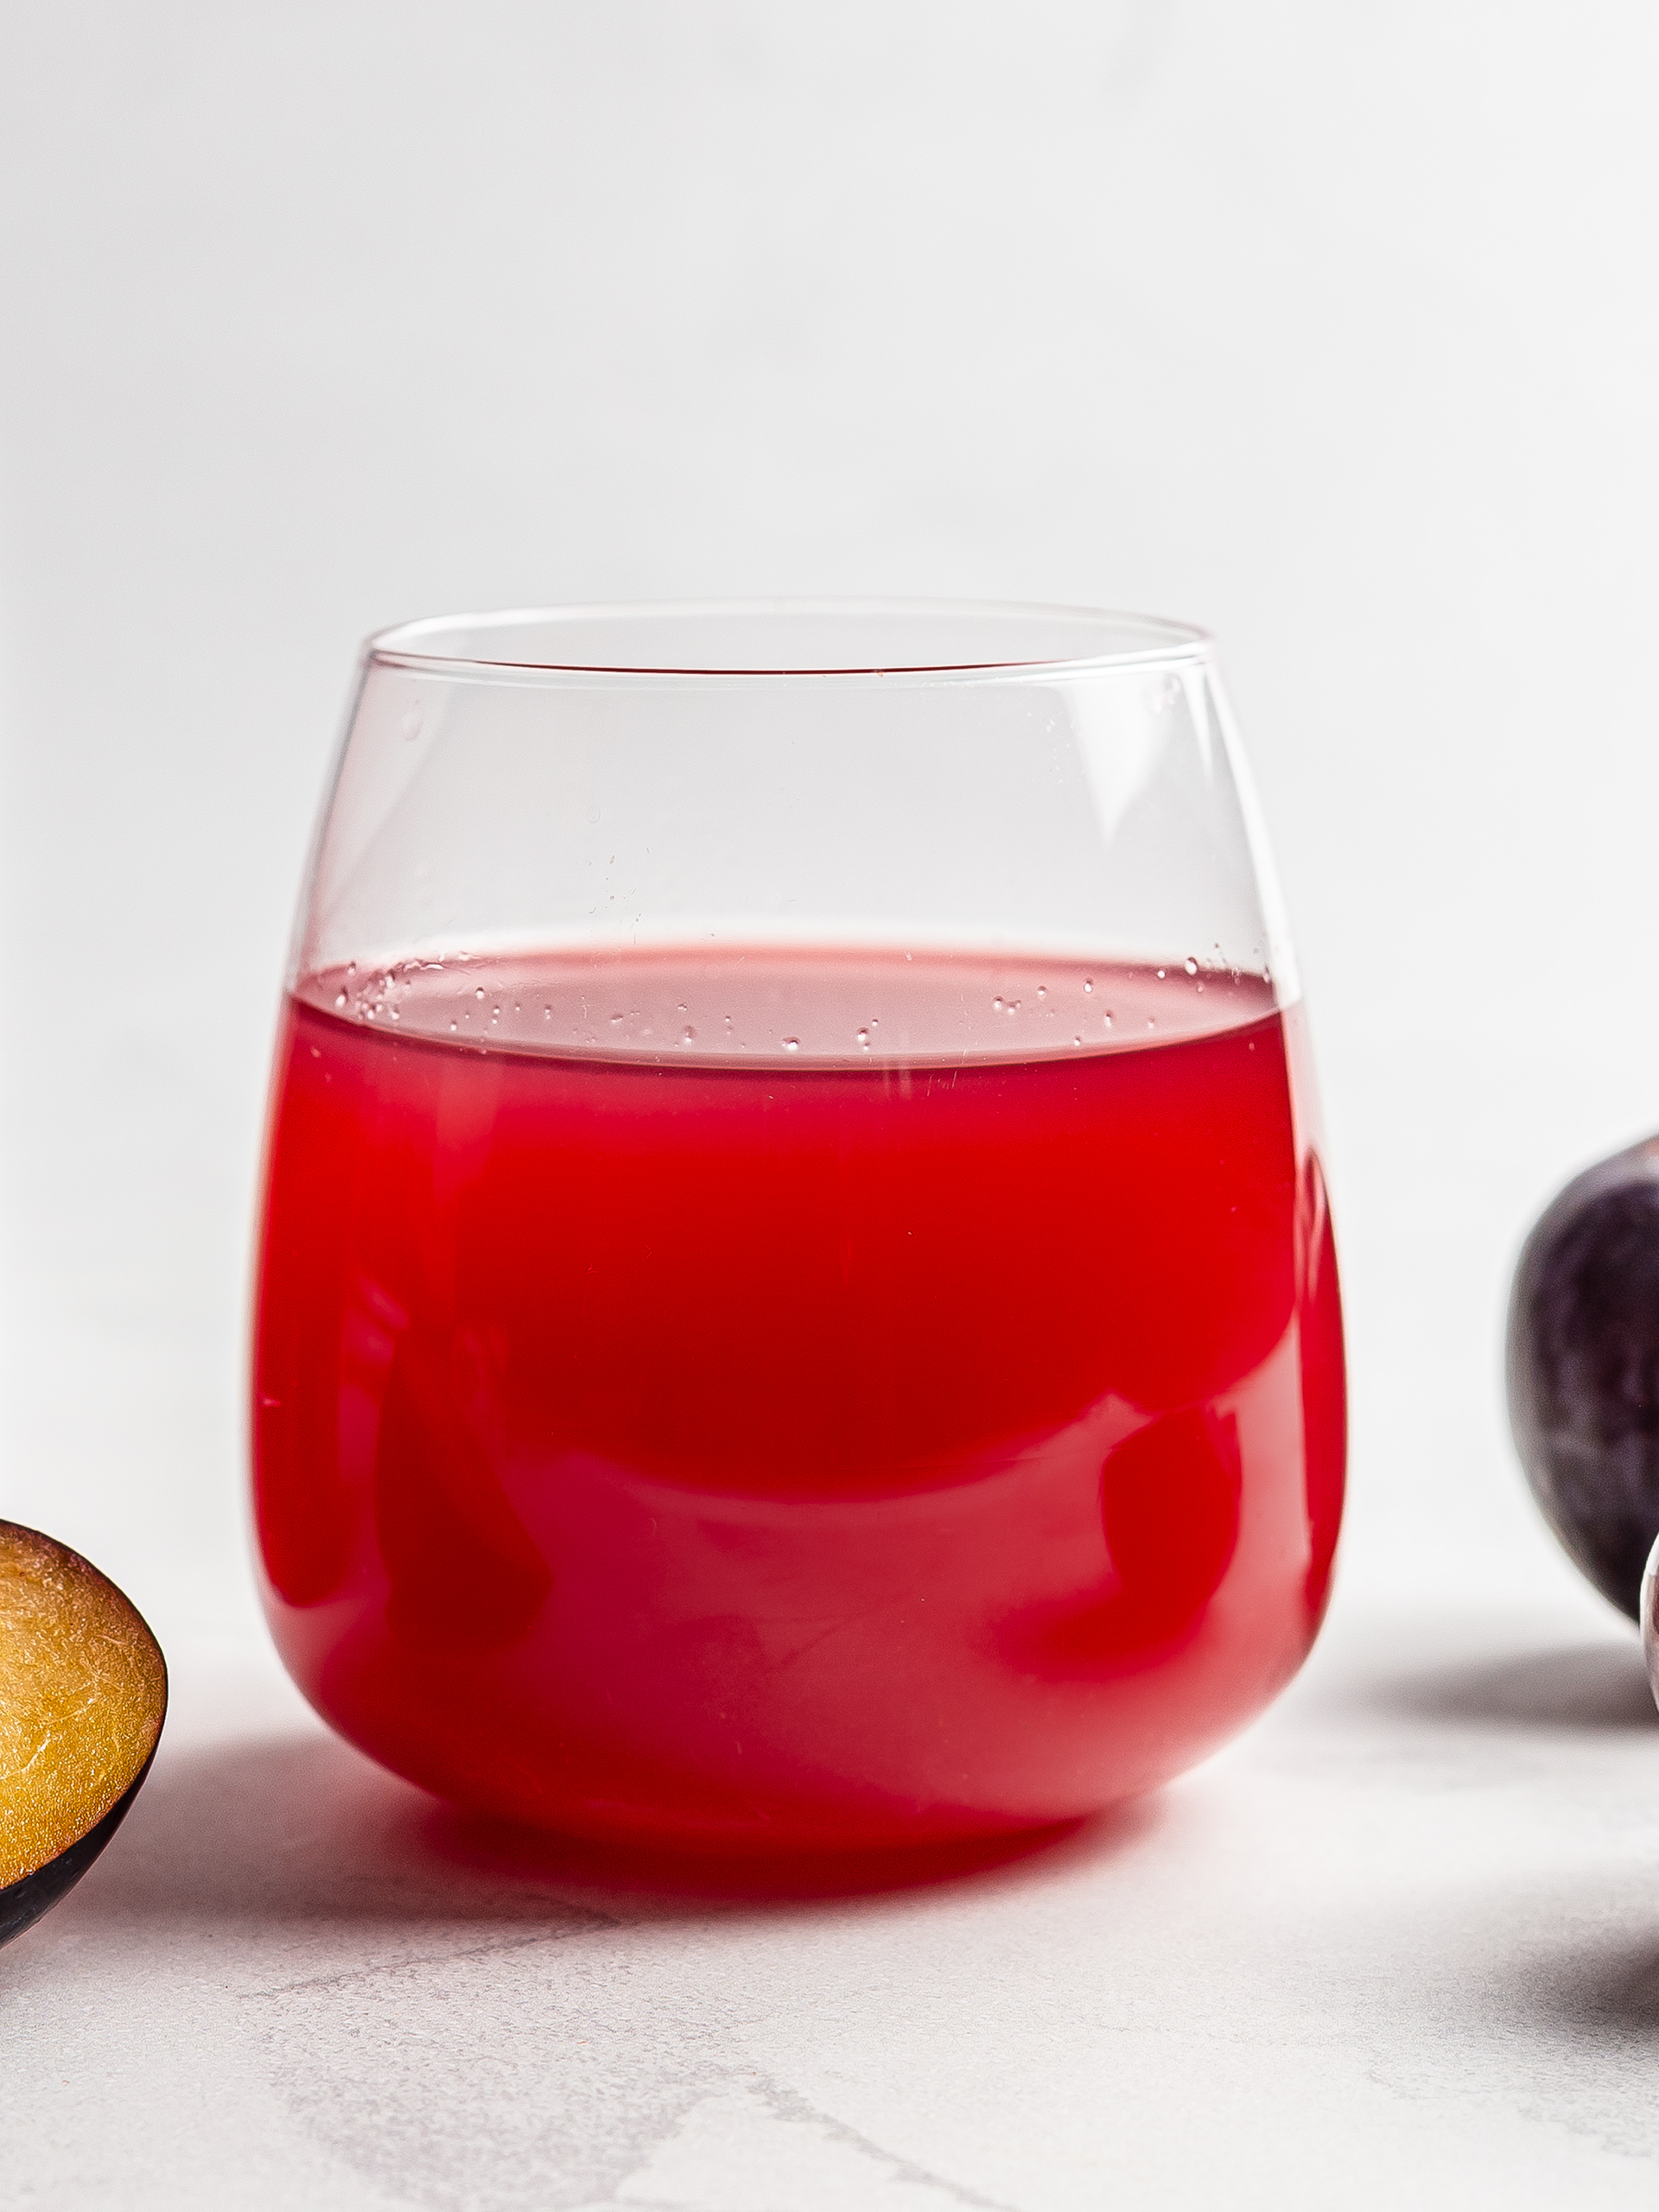 plum juice in a glass